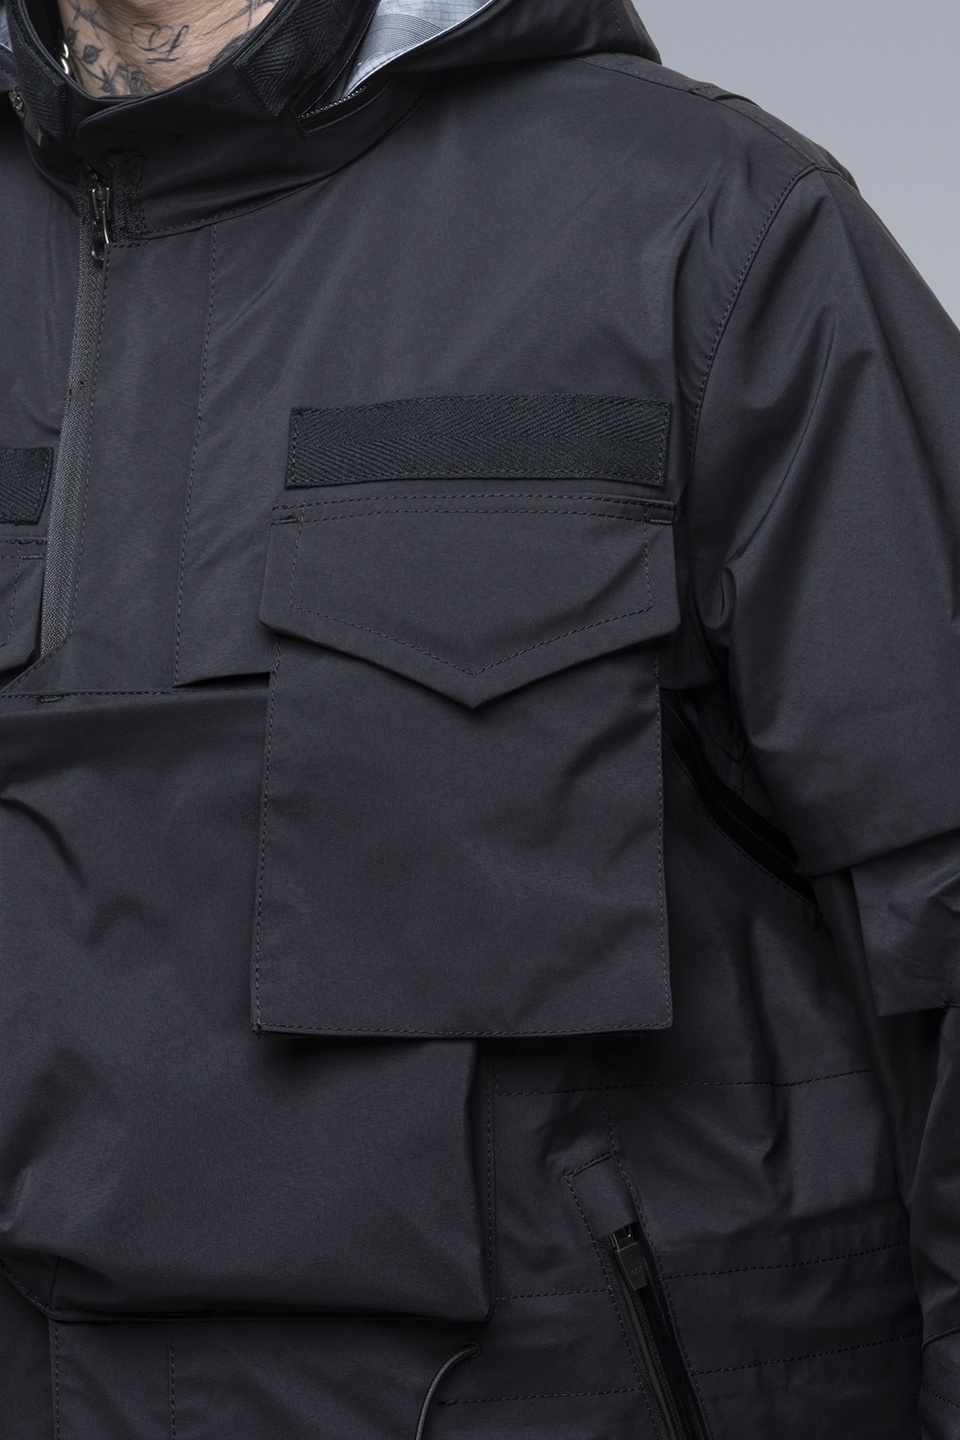 ACRONYM SAC-J2761 sacai / ACRONYM Field Jacket Black | REVERSIBLE